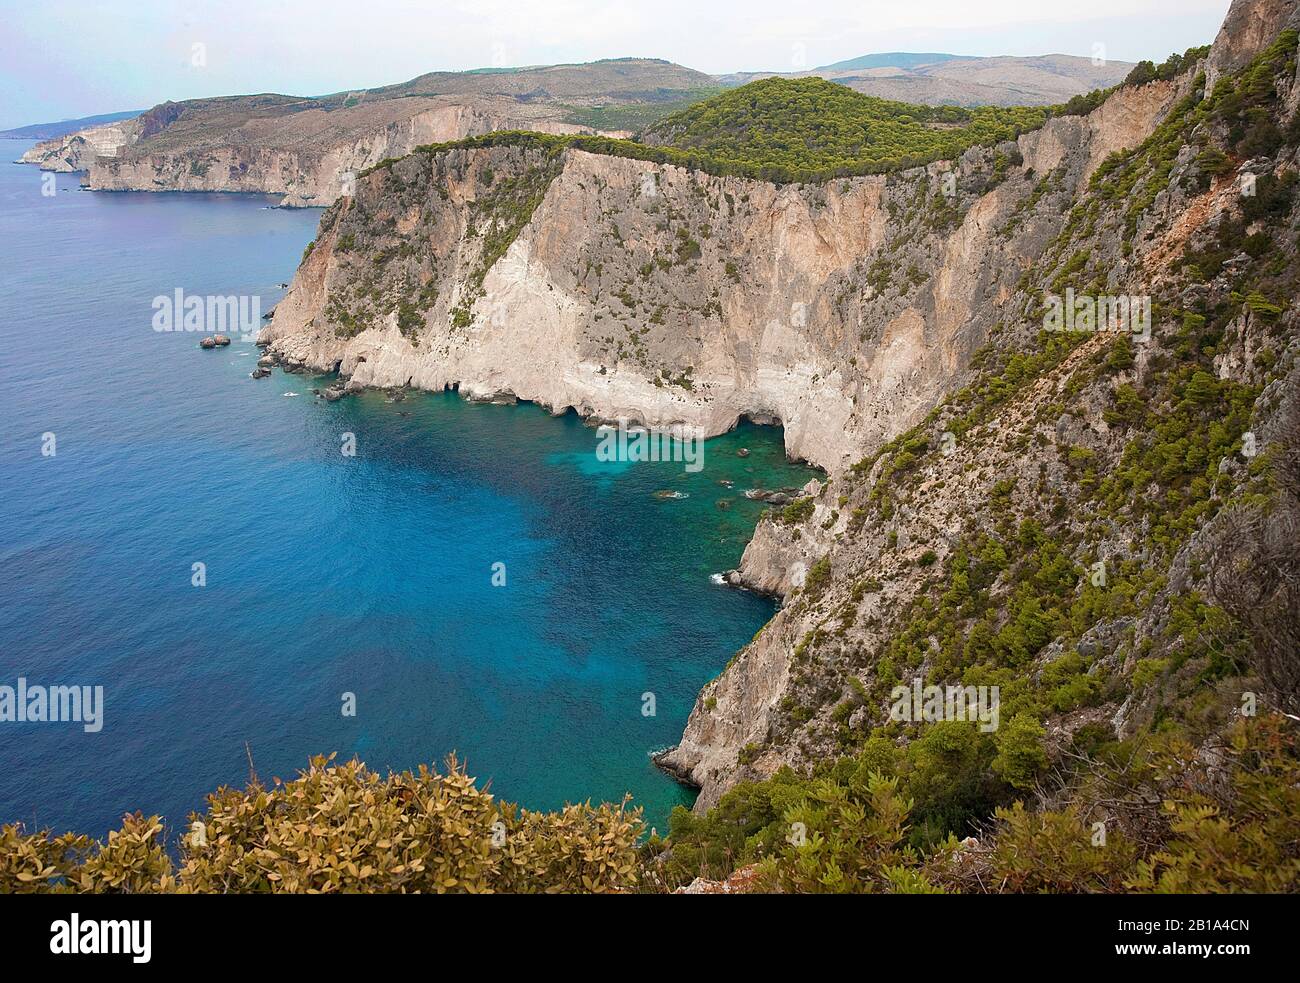 Steilküste am Kap Keri, Keri, Zakynthos, Griechenland, am Kap Keri, Keri, der Insel Zakynthos, Griechenland Stockfoto